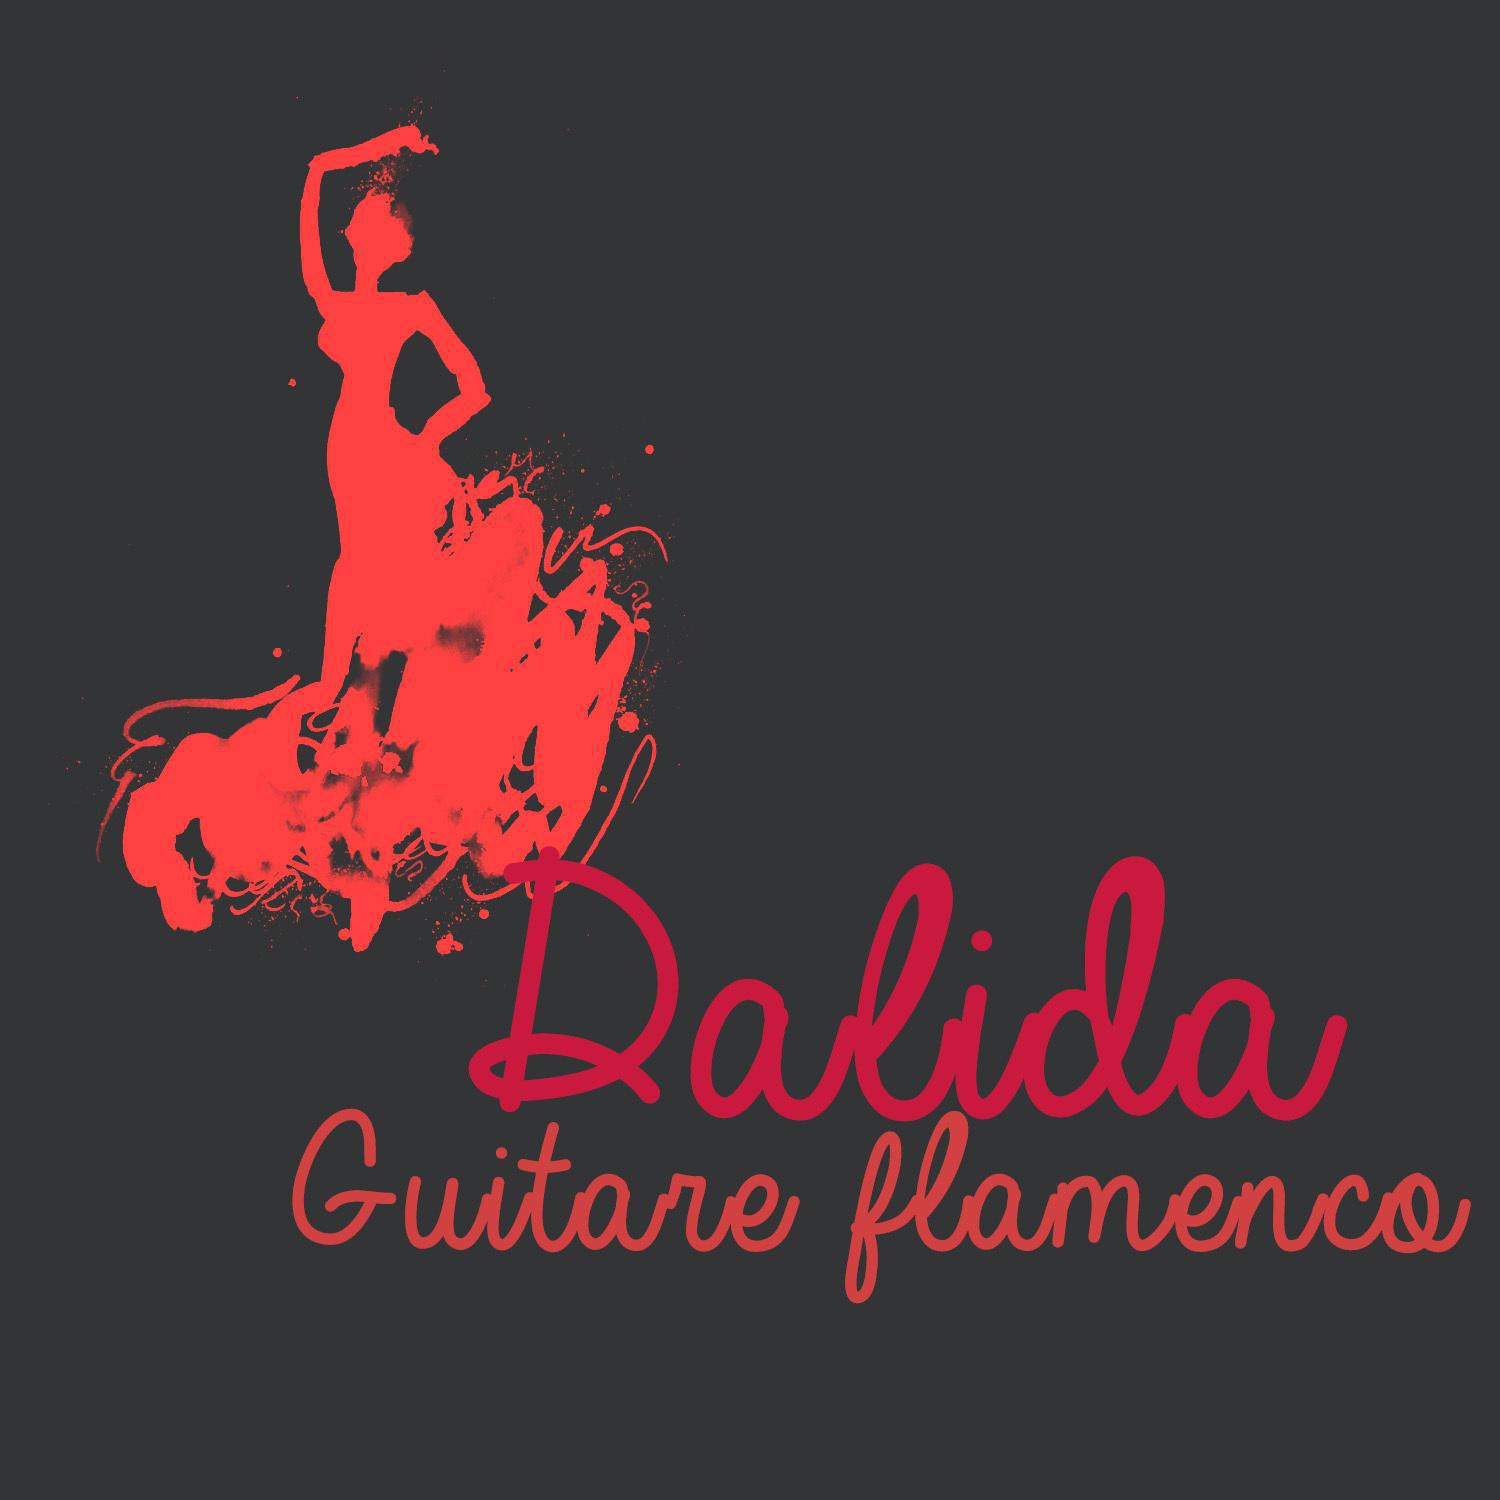 Guitare flamenco专辑